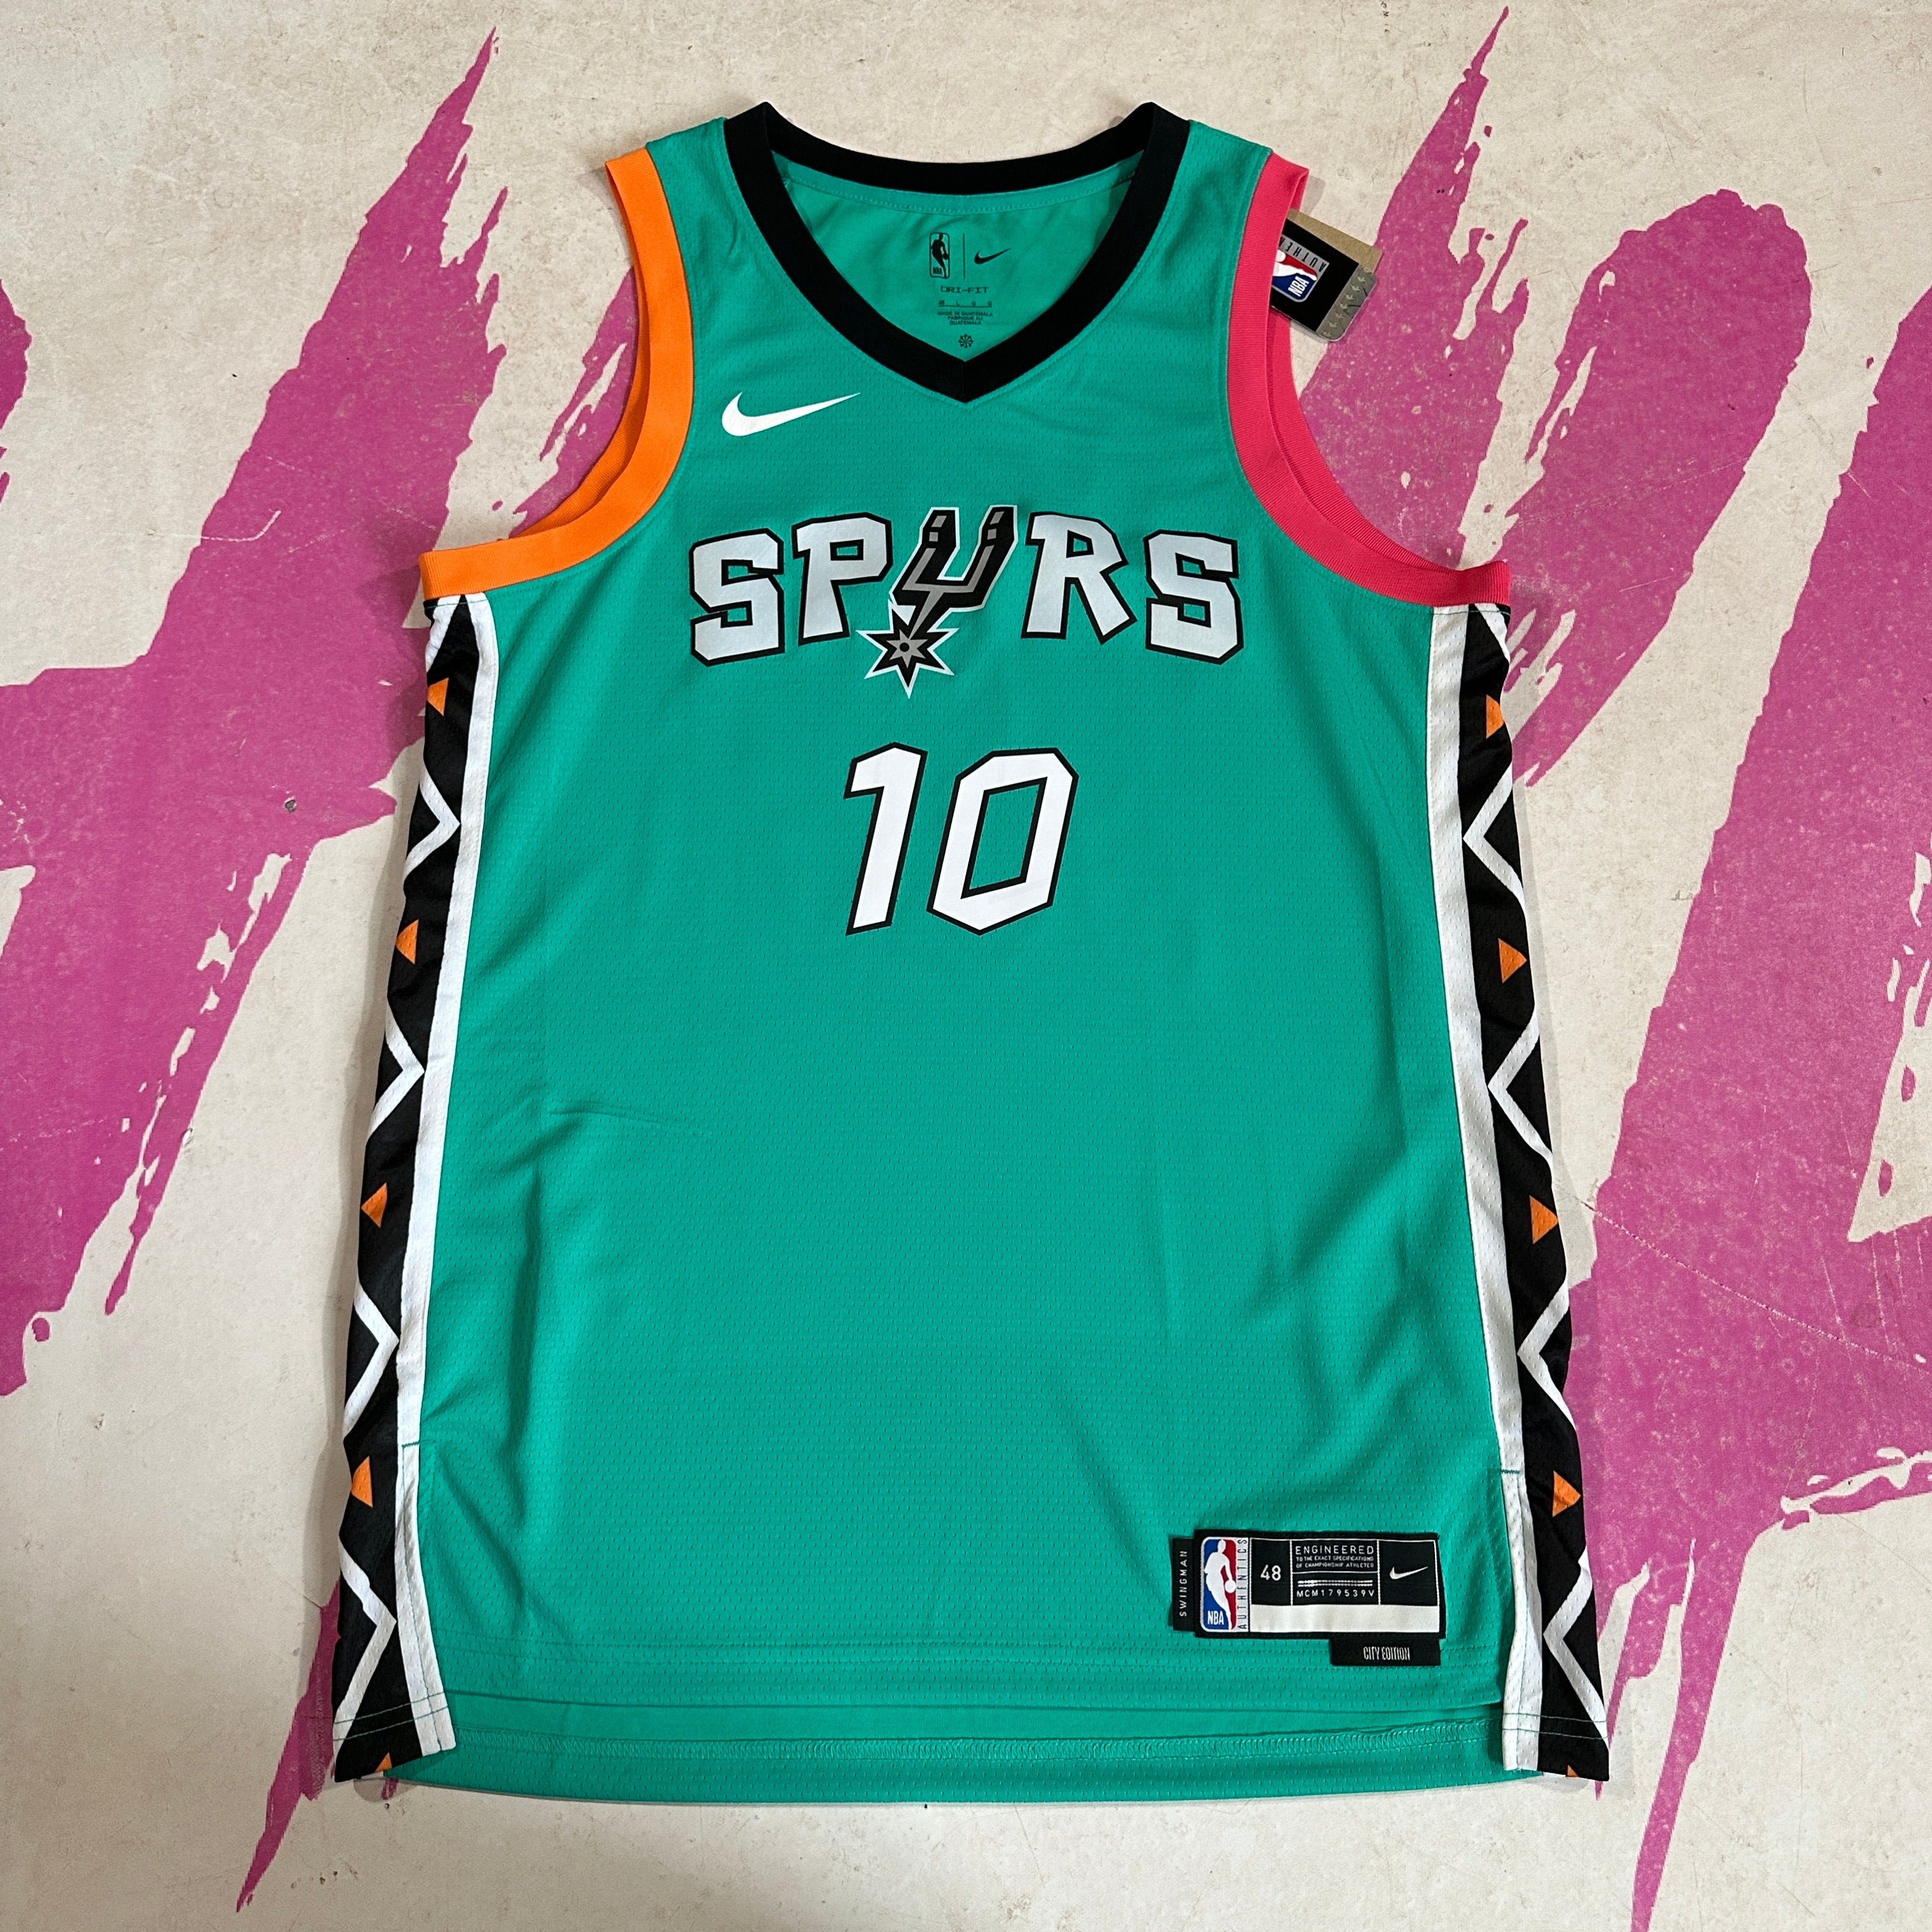 Nike Youth Jeremy Sochan San Antonio Spurs 2022 City Edition Swingman Jersey, Teal, Size: Large, Polyester